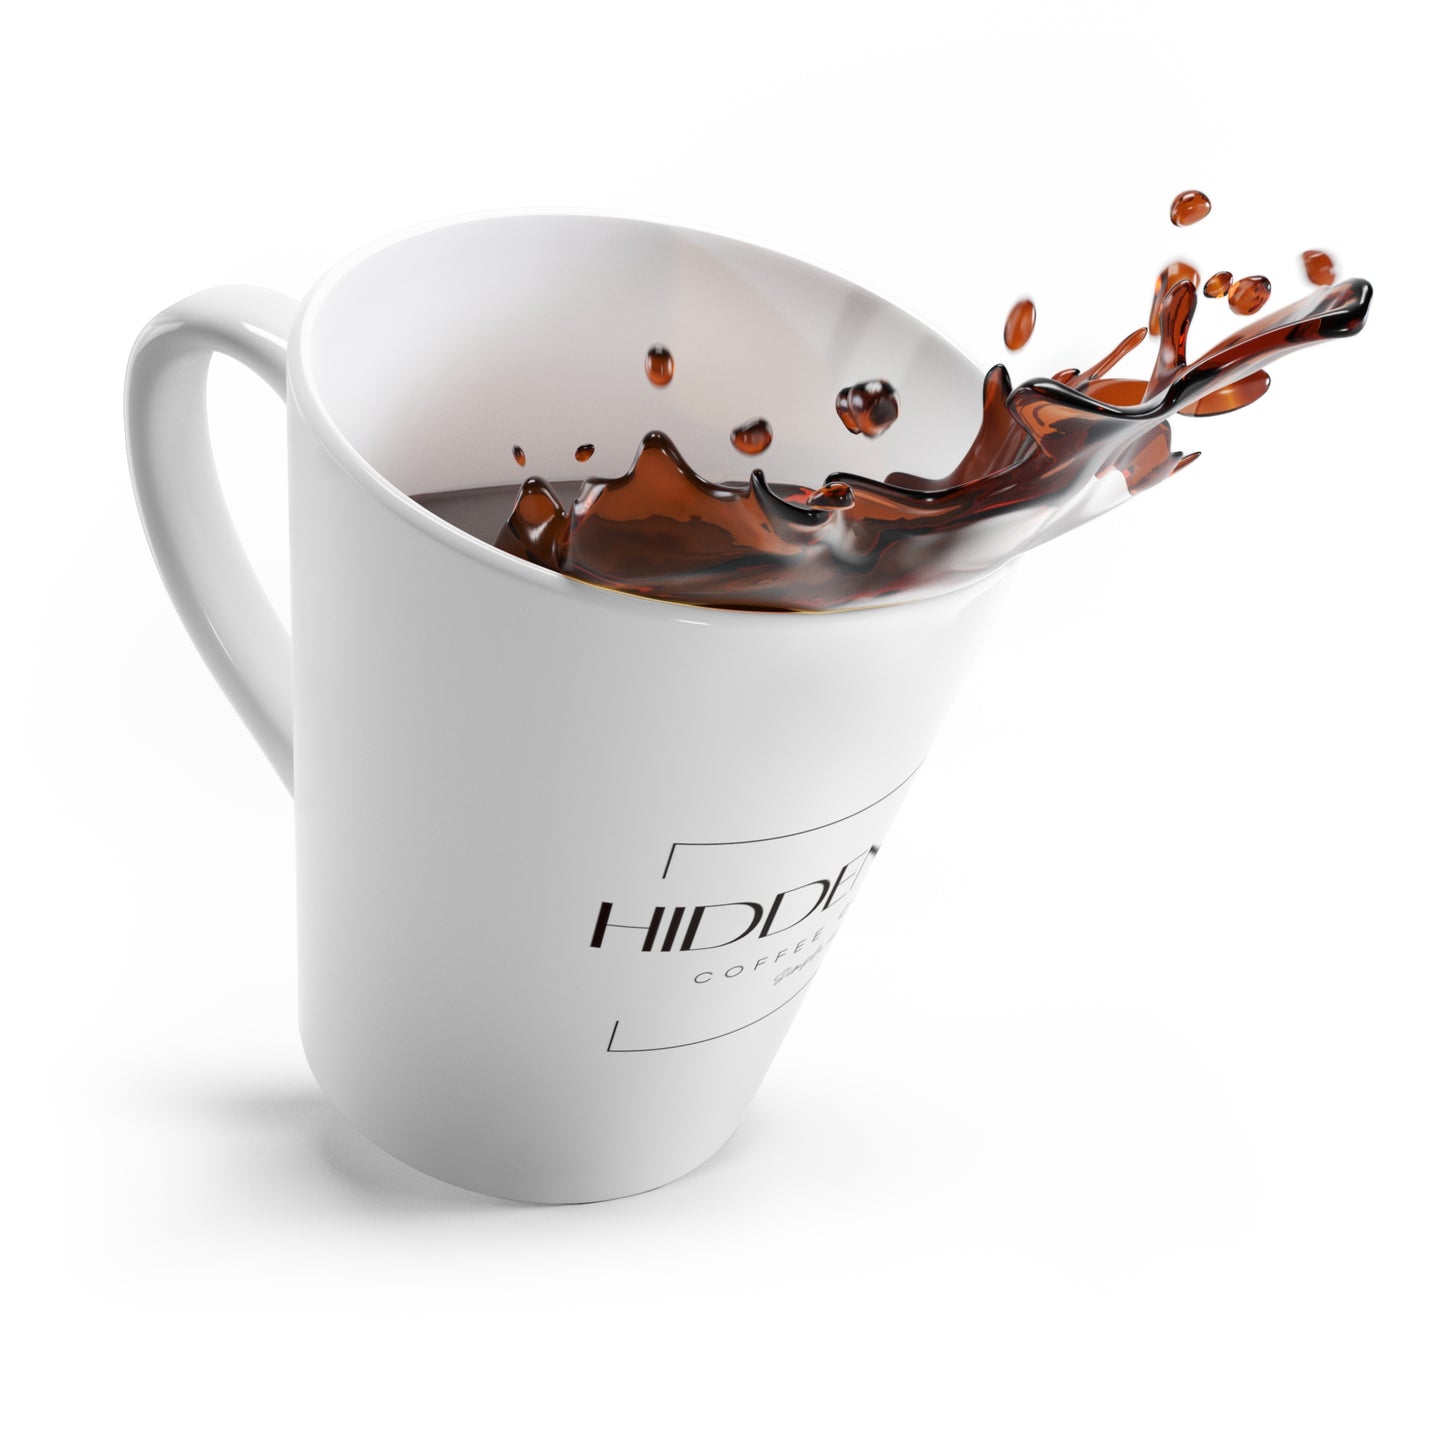 Hidden Hills Coffee Co. Latte Mug